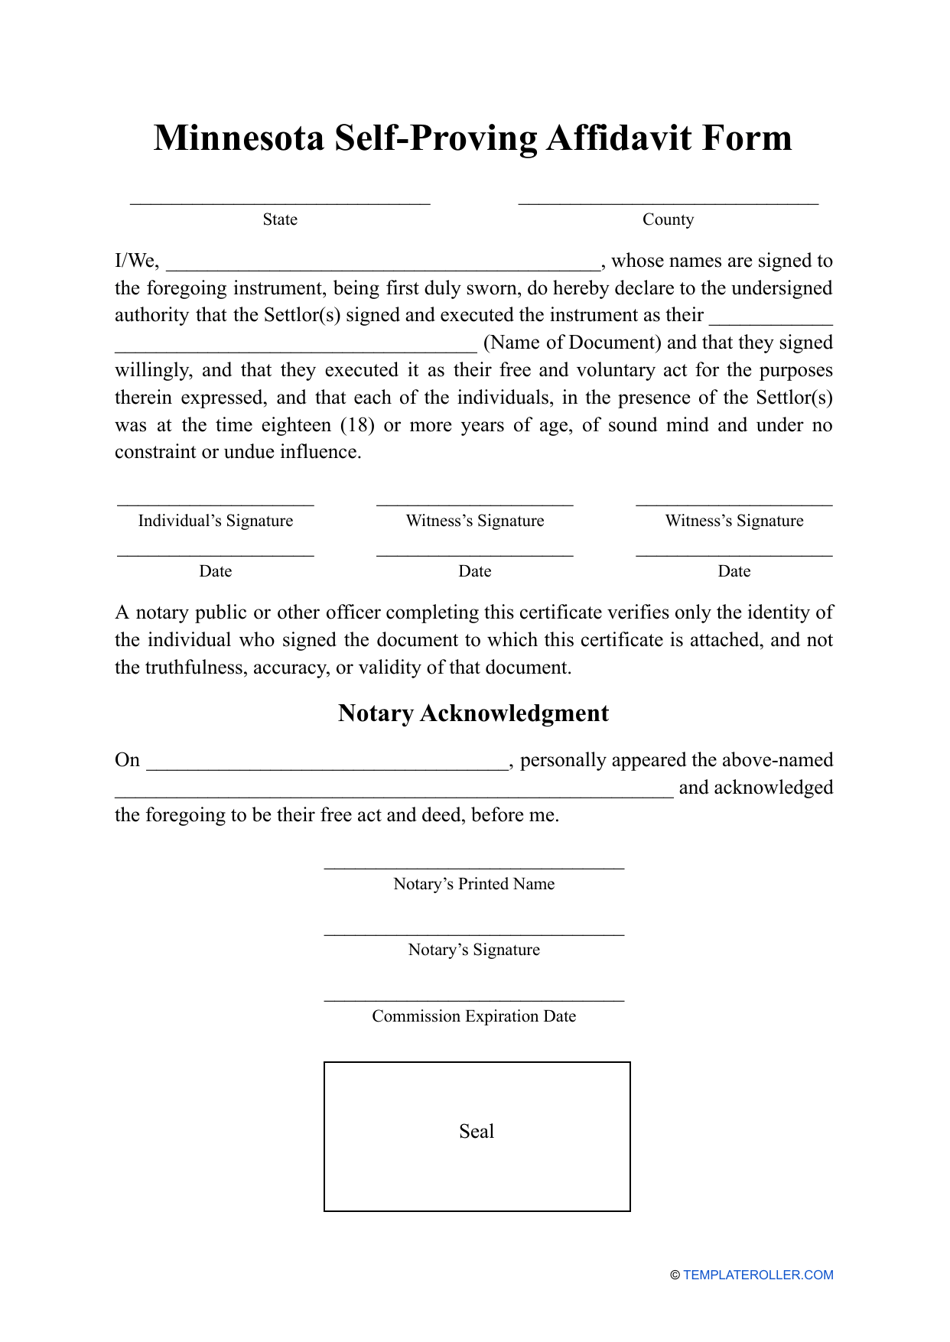 Self-proving Affidavit Form - Minnesota, Page 1